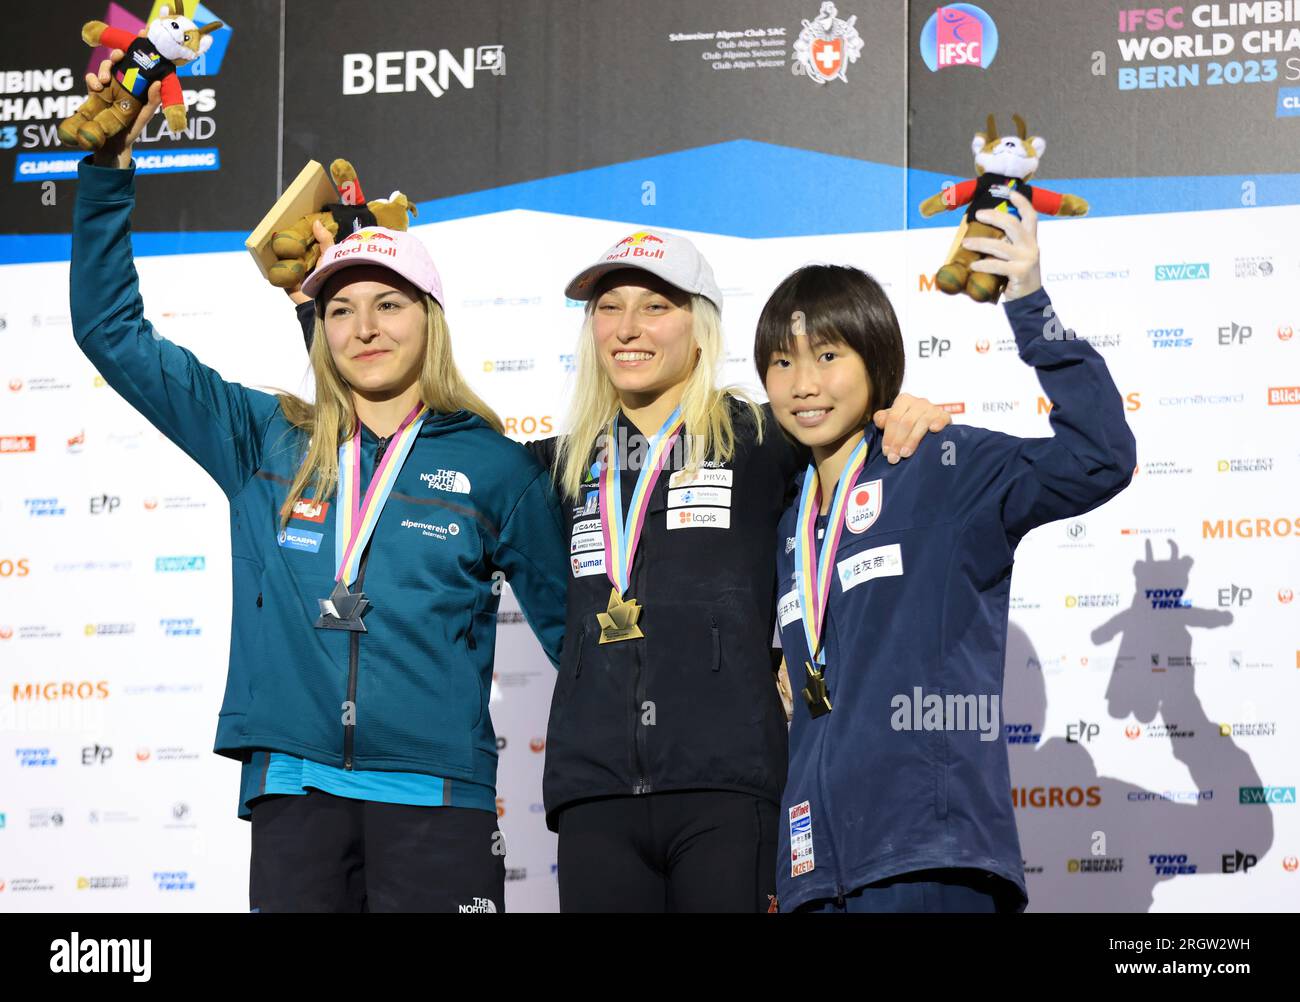 Jessica PILZ of Austria, silver, Janja GARNBRET of Slovenia, gold, and Ai  MORI of Japan, bronze, celebrate on the podium of women's Boulder & Lead of  the Climbing World Championships in Bern,